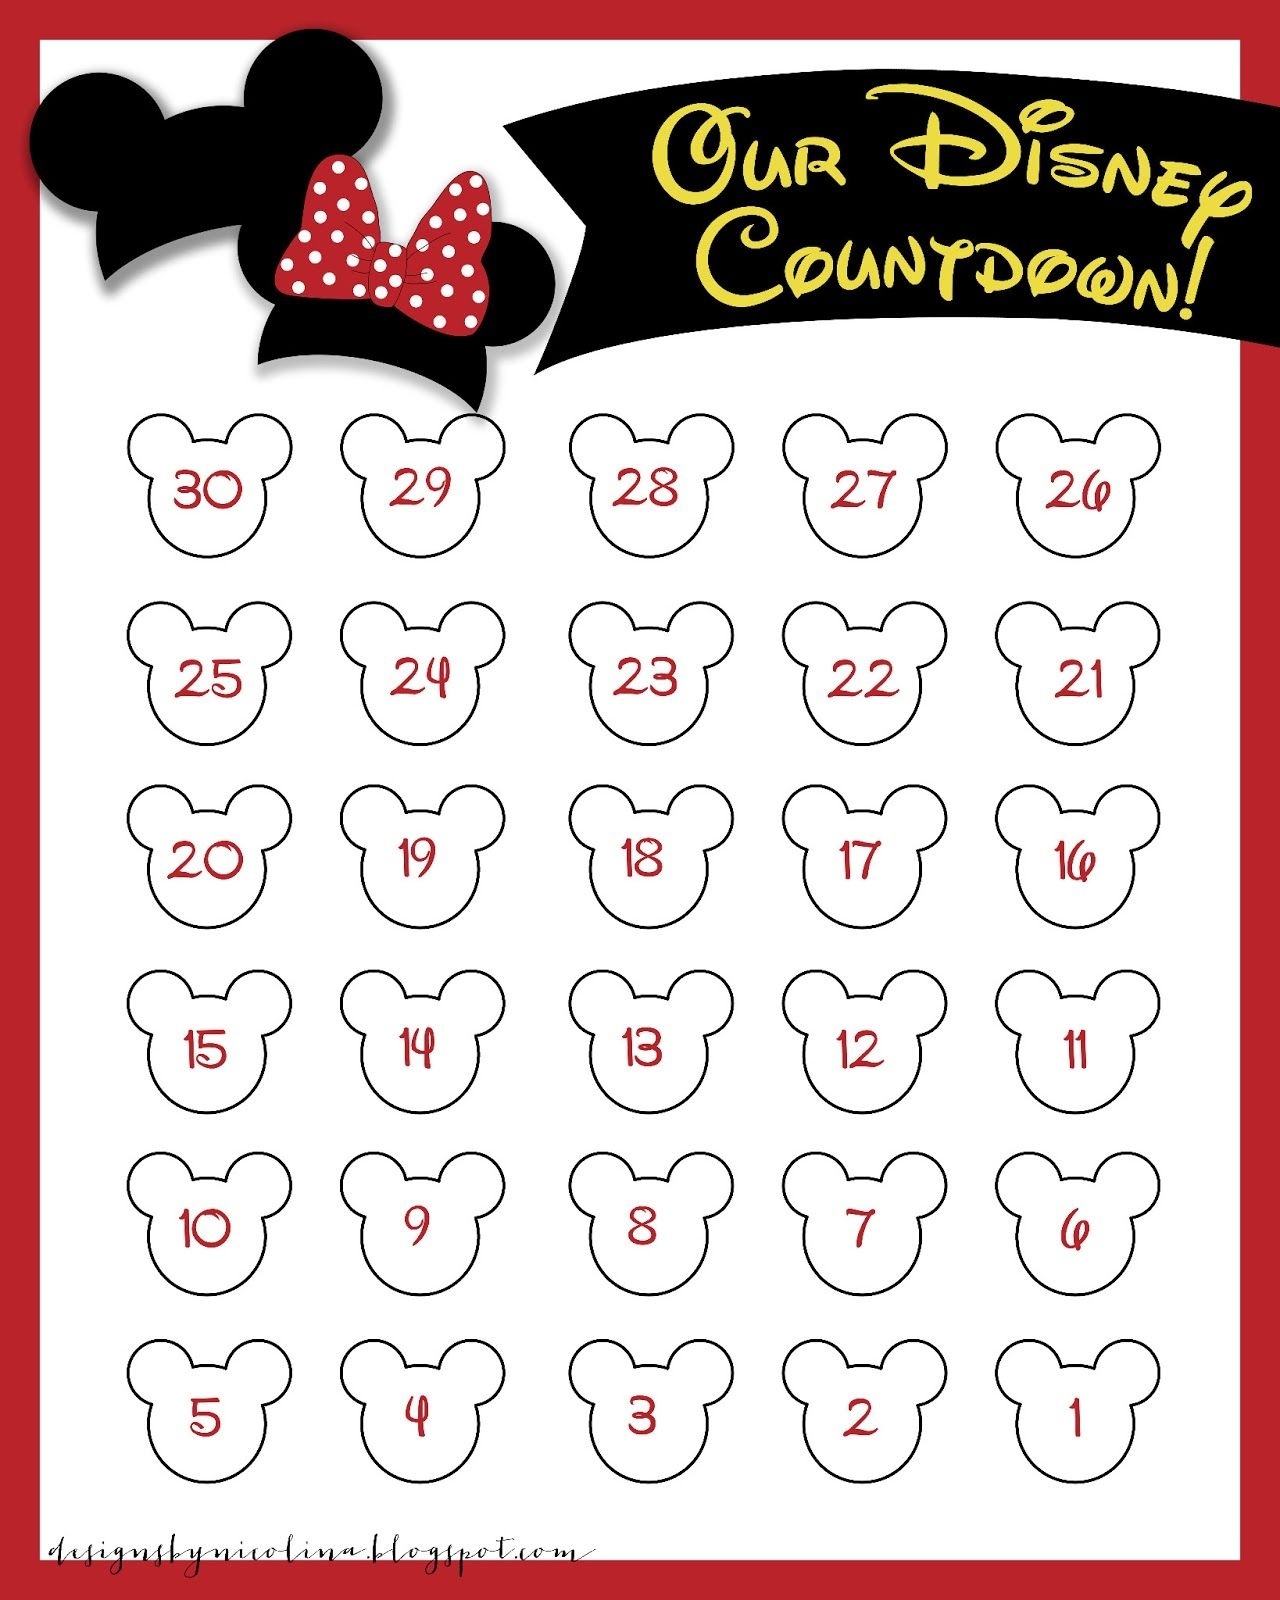 Disneyland Countdown Calendar | Designs By Nicolina: Disney Extraordinary Count Diwn To Disneyland Trip